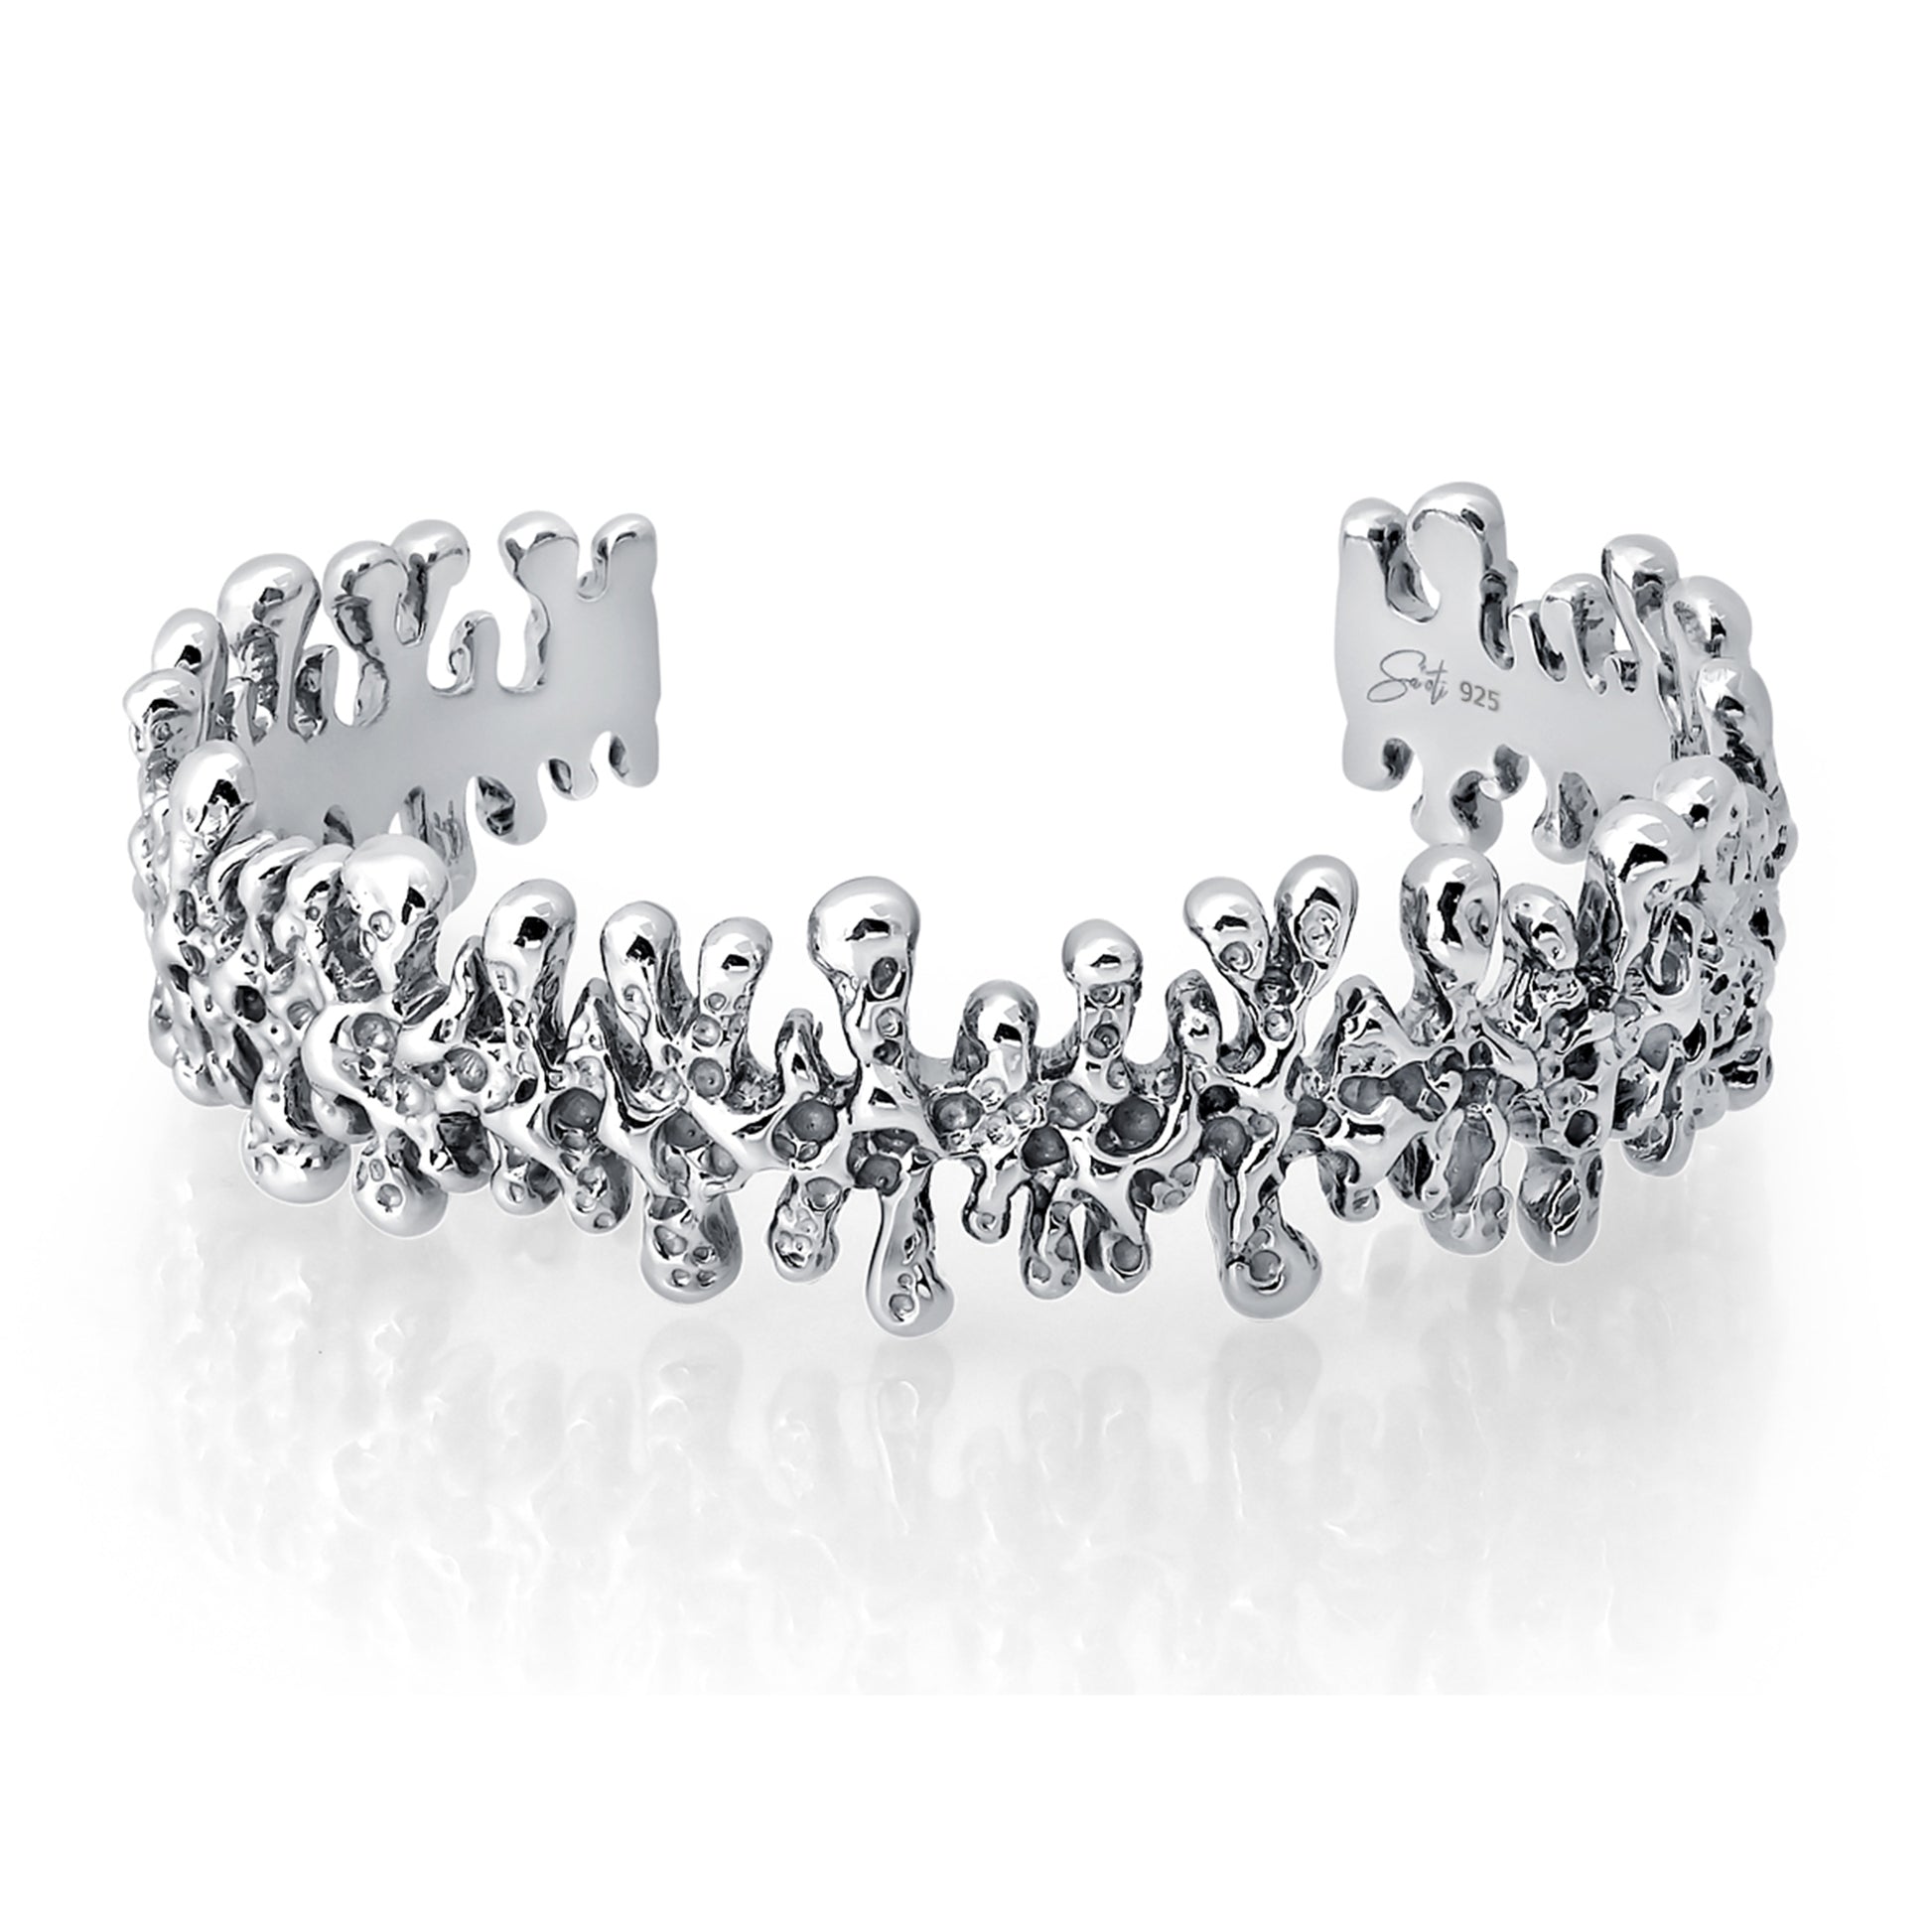 sa'oti saoti jewelry handcrafted 925 sterling silver rhodium plated melt bracelet cuff